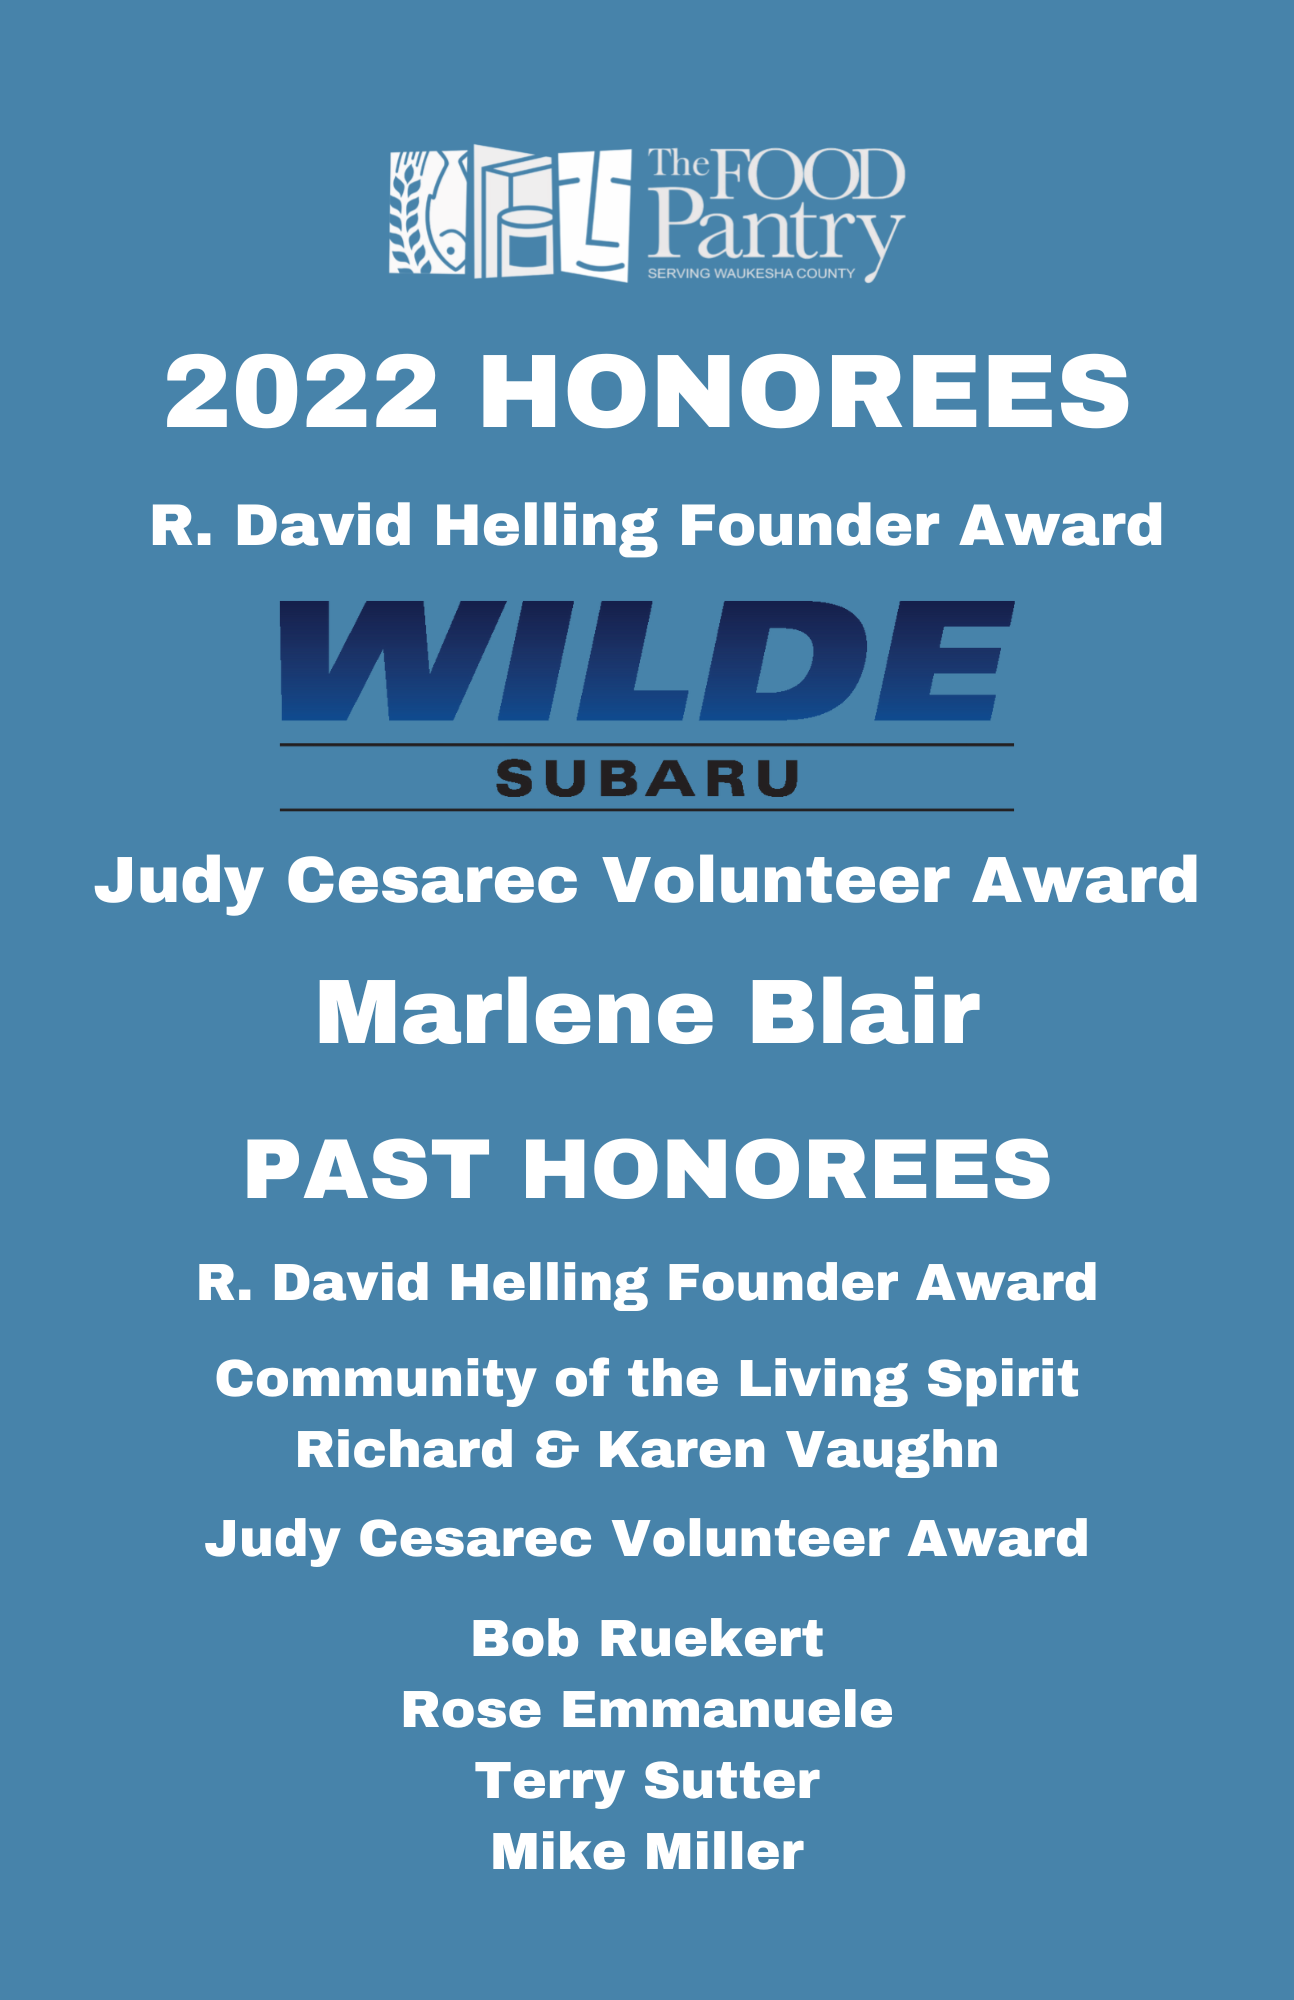 2022 Honorees Wilde Subaru and Marlene Blair